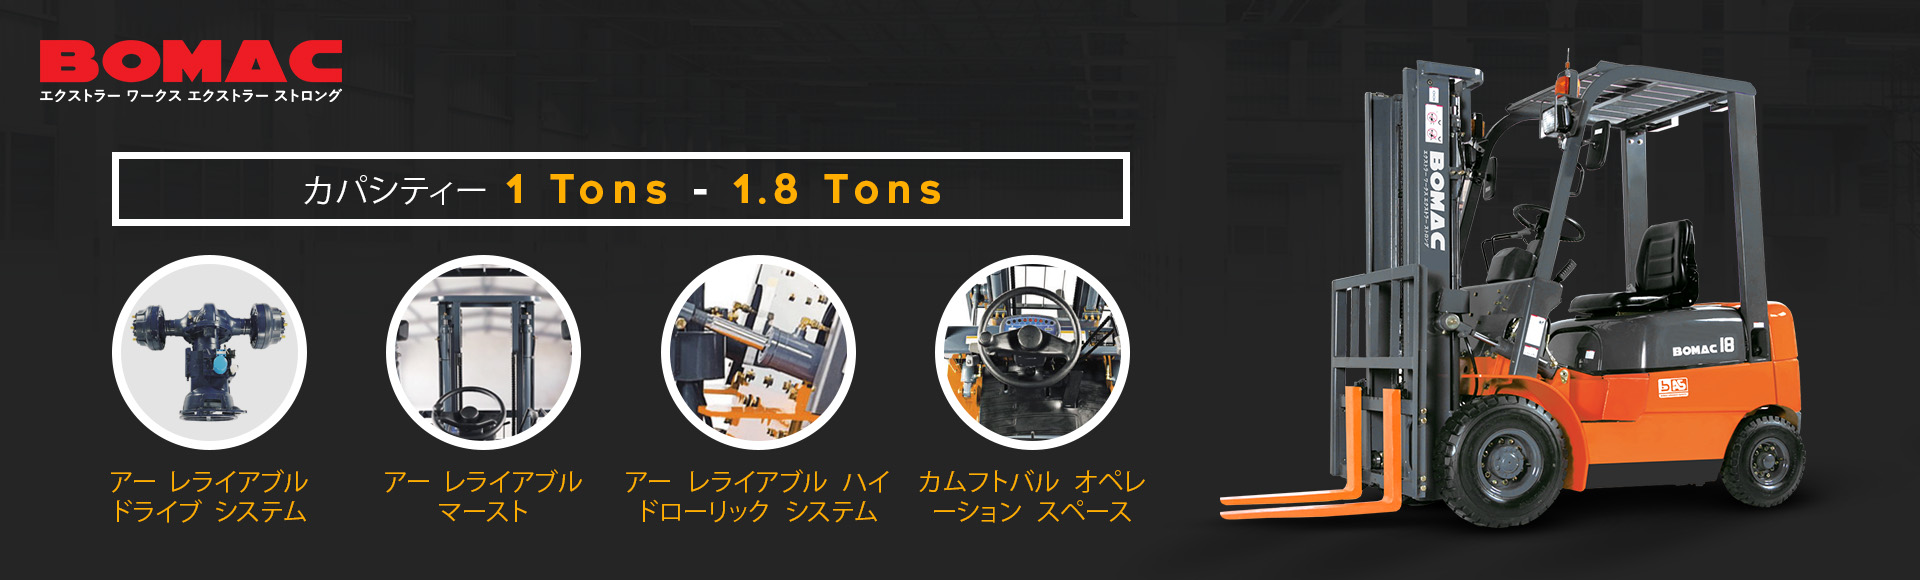 Banner Bomac Forklift Japan 1 TON - 1.8 TON Japan Ver 2